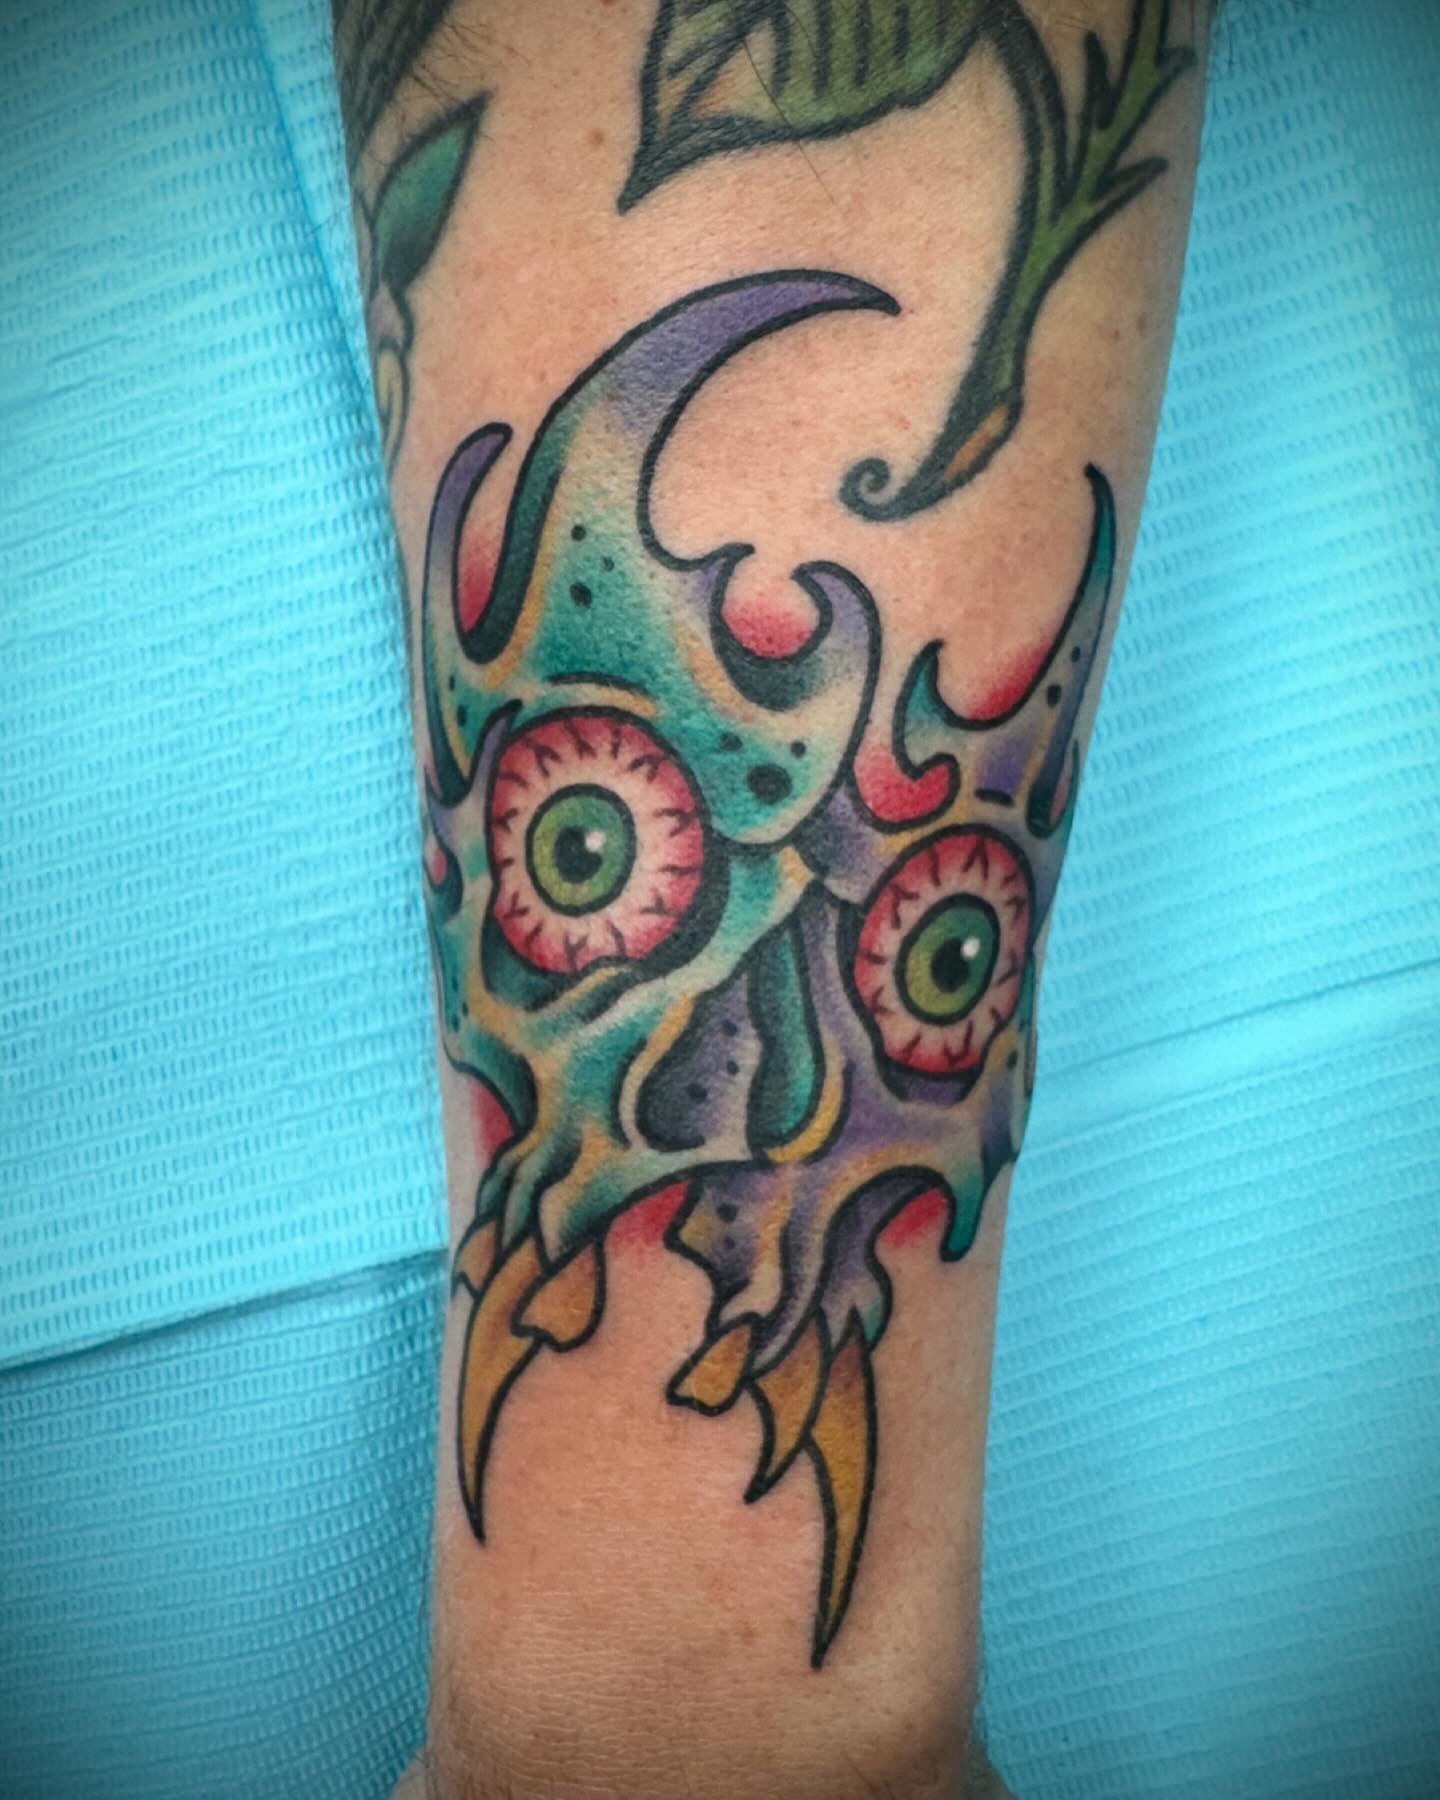 Another walk-in tattoo done by Gabe @gabriel_richmond #skulls #tattoos #custom #colortattoo #coils #bickneetattoosupply #gallipolisohio #bickneetattoosupply